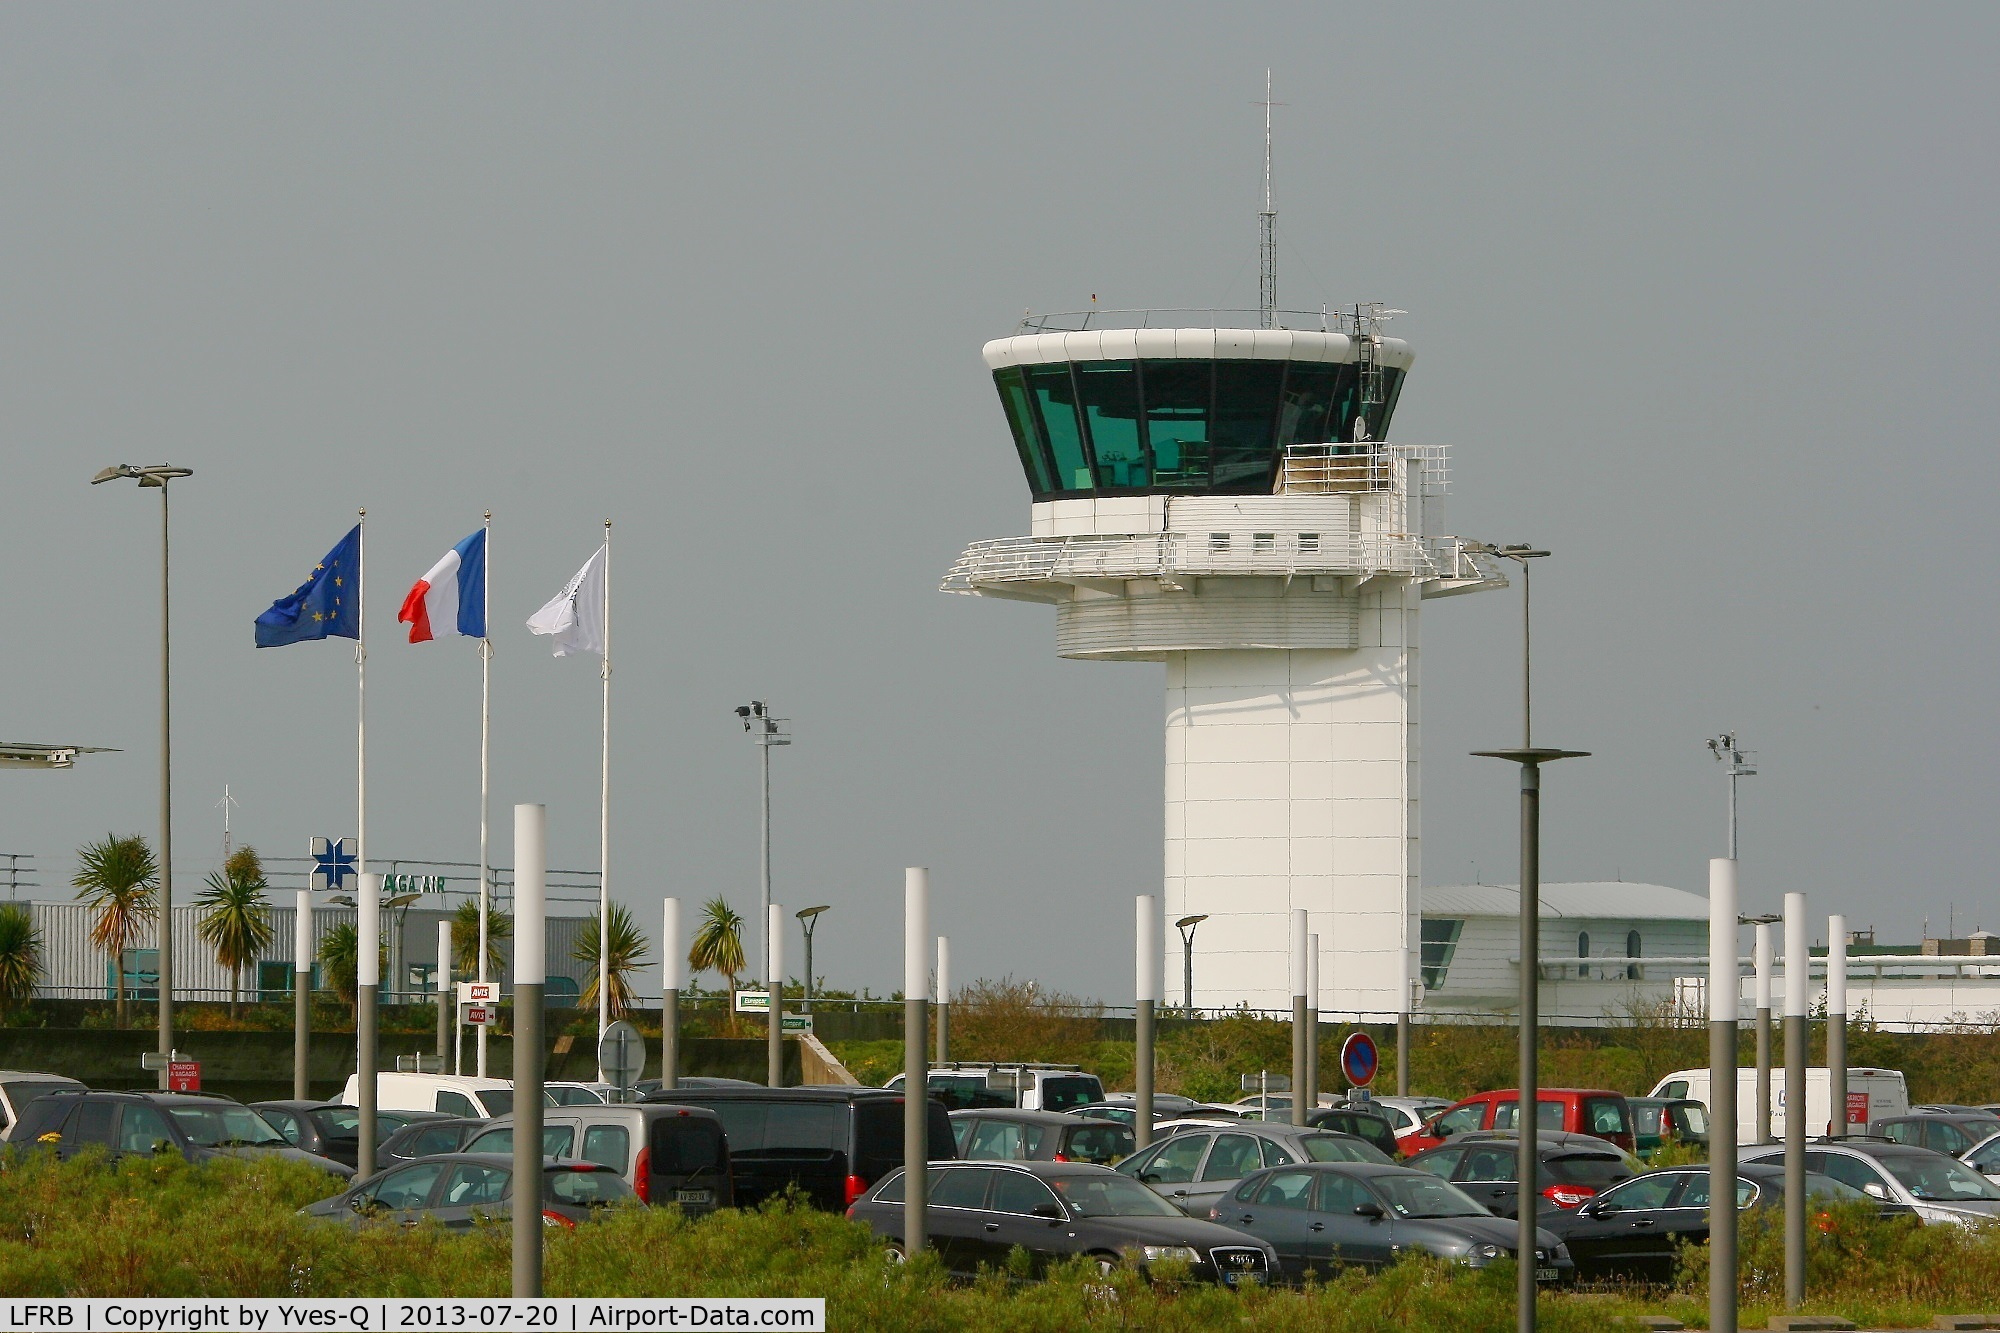 Brest Bretagne Airport, Brest France (LFRB) - Control Tower, Brest-Guipavas Regional Airport (LFRB-BES)